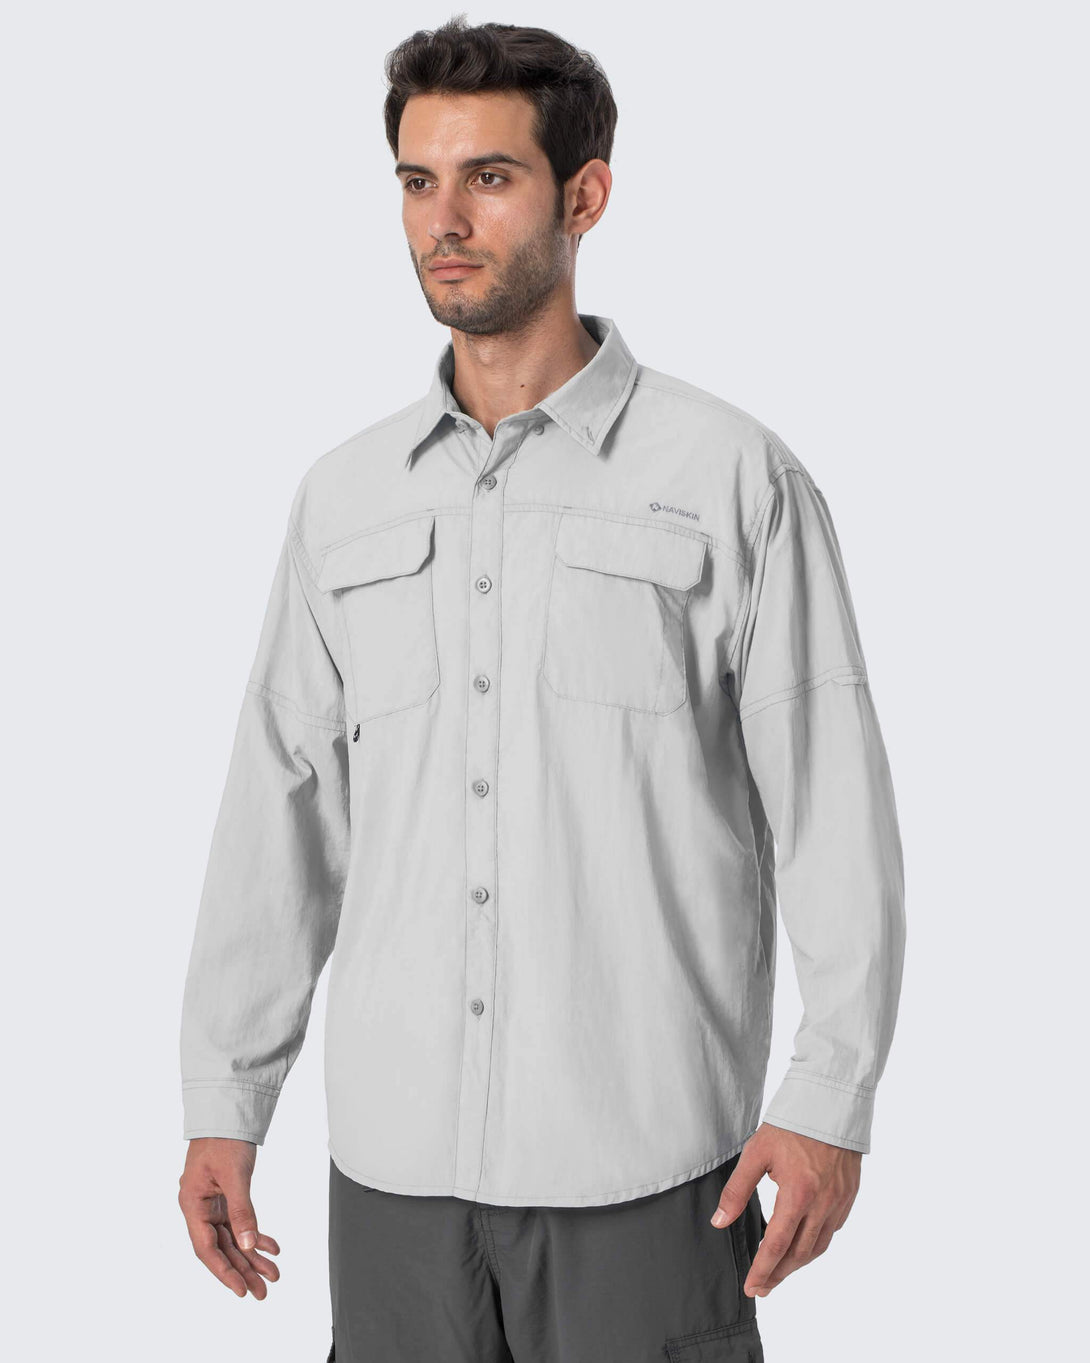 NAVISKIN Men's UPF 50+ Sun Protection Clothing Hiking Fishing Shirt Lightweight Quick Dry SPF Outdoor Long Sleeve Shirt, Grey / Small